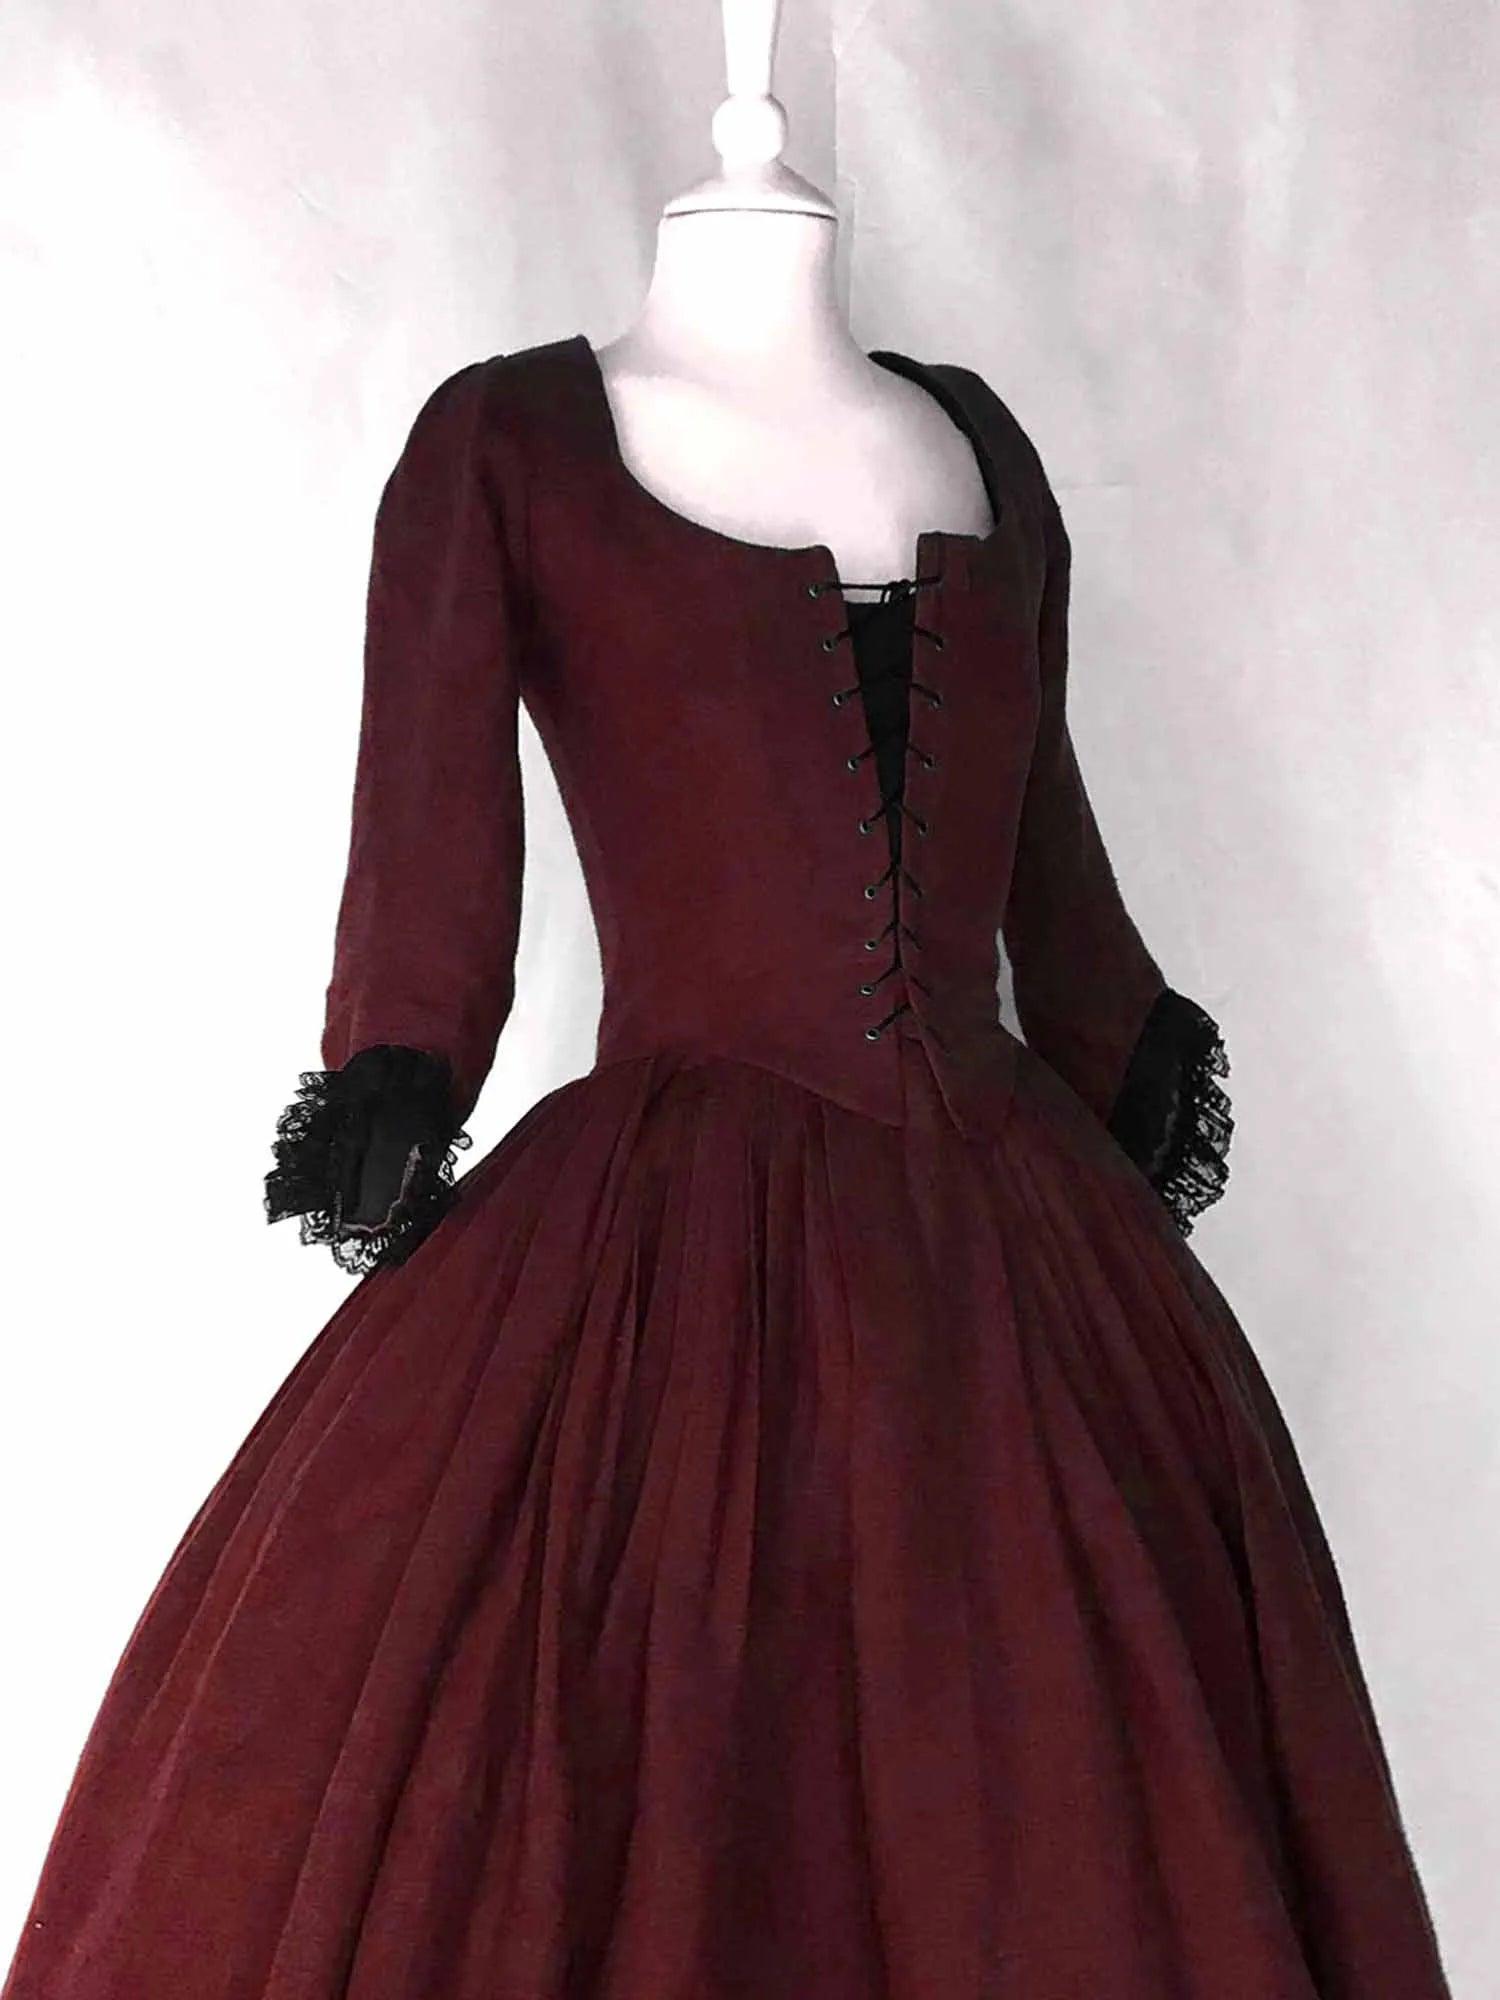 LOUISE, 18th-Century Dress in Burgundy Linen - Atelier Serraspina